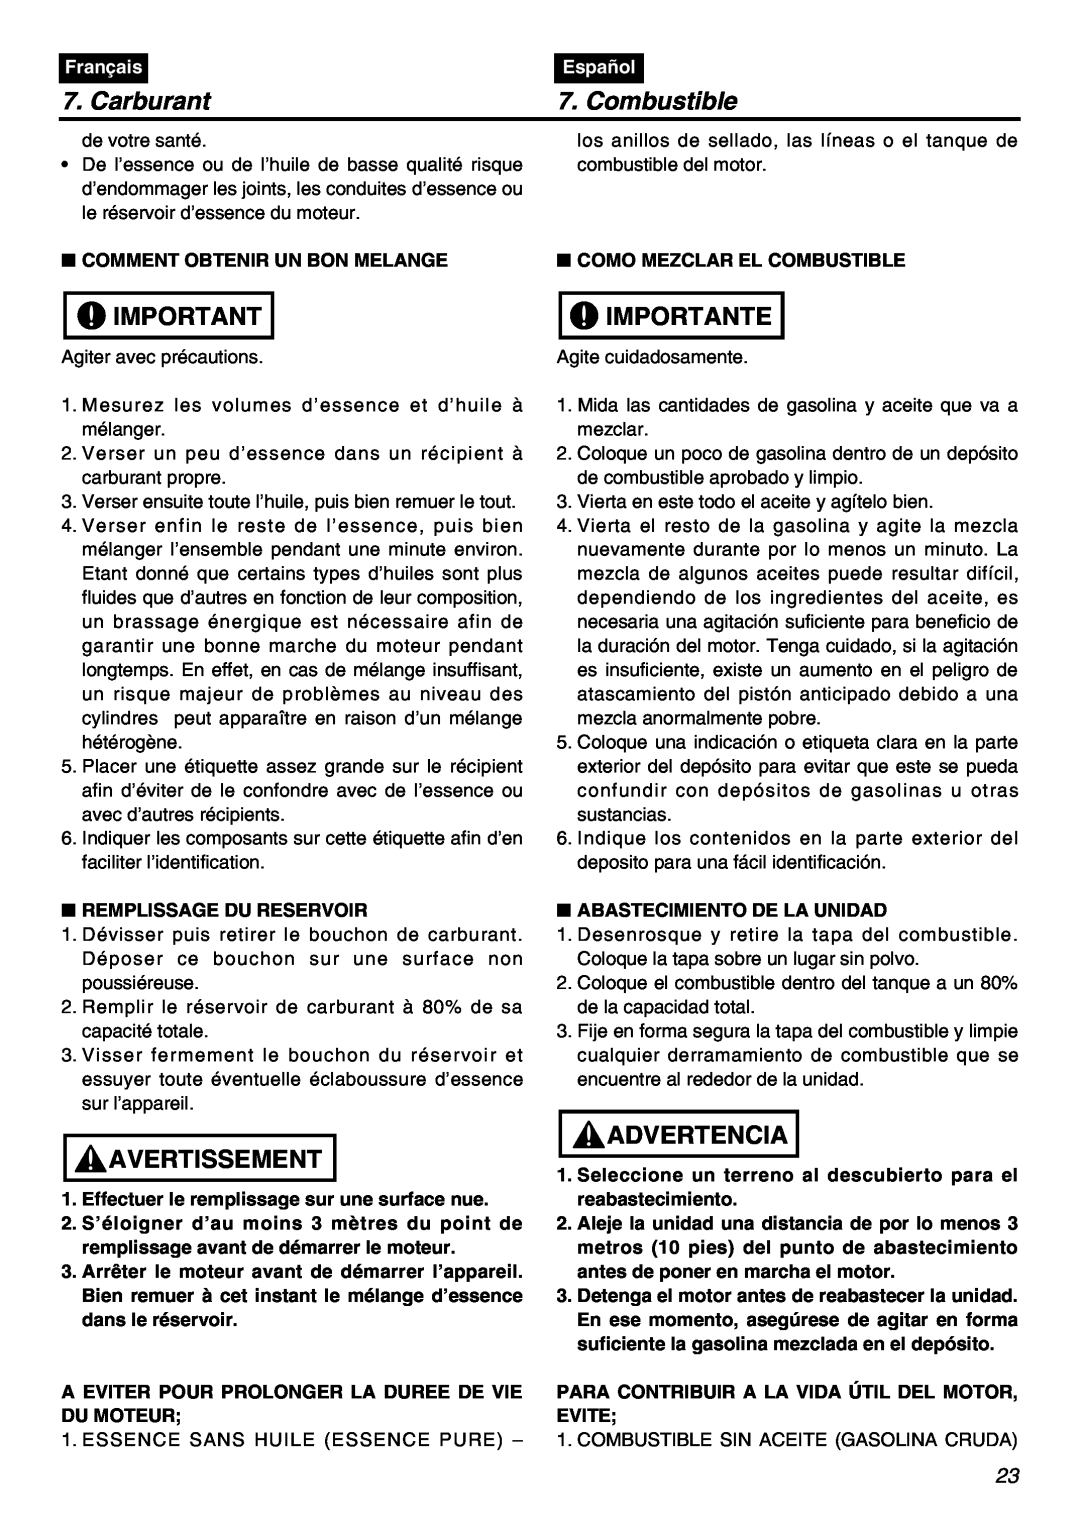 Zenoah HEZ2602S manual Carburant, Combustible, Importante, Avertissement, Advertencia, Français, Español 